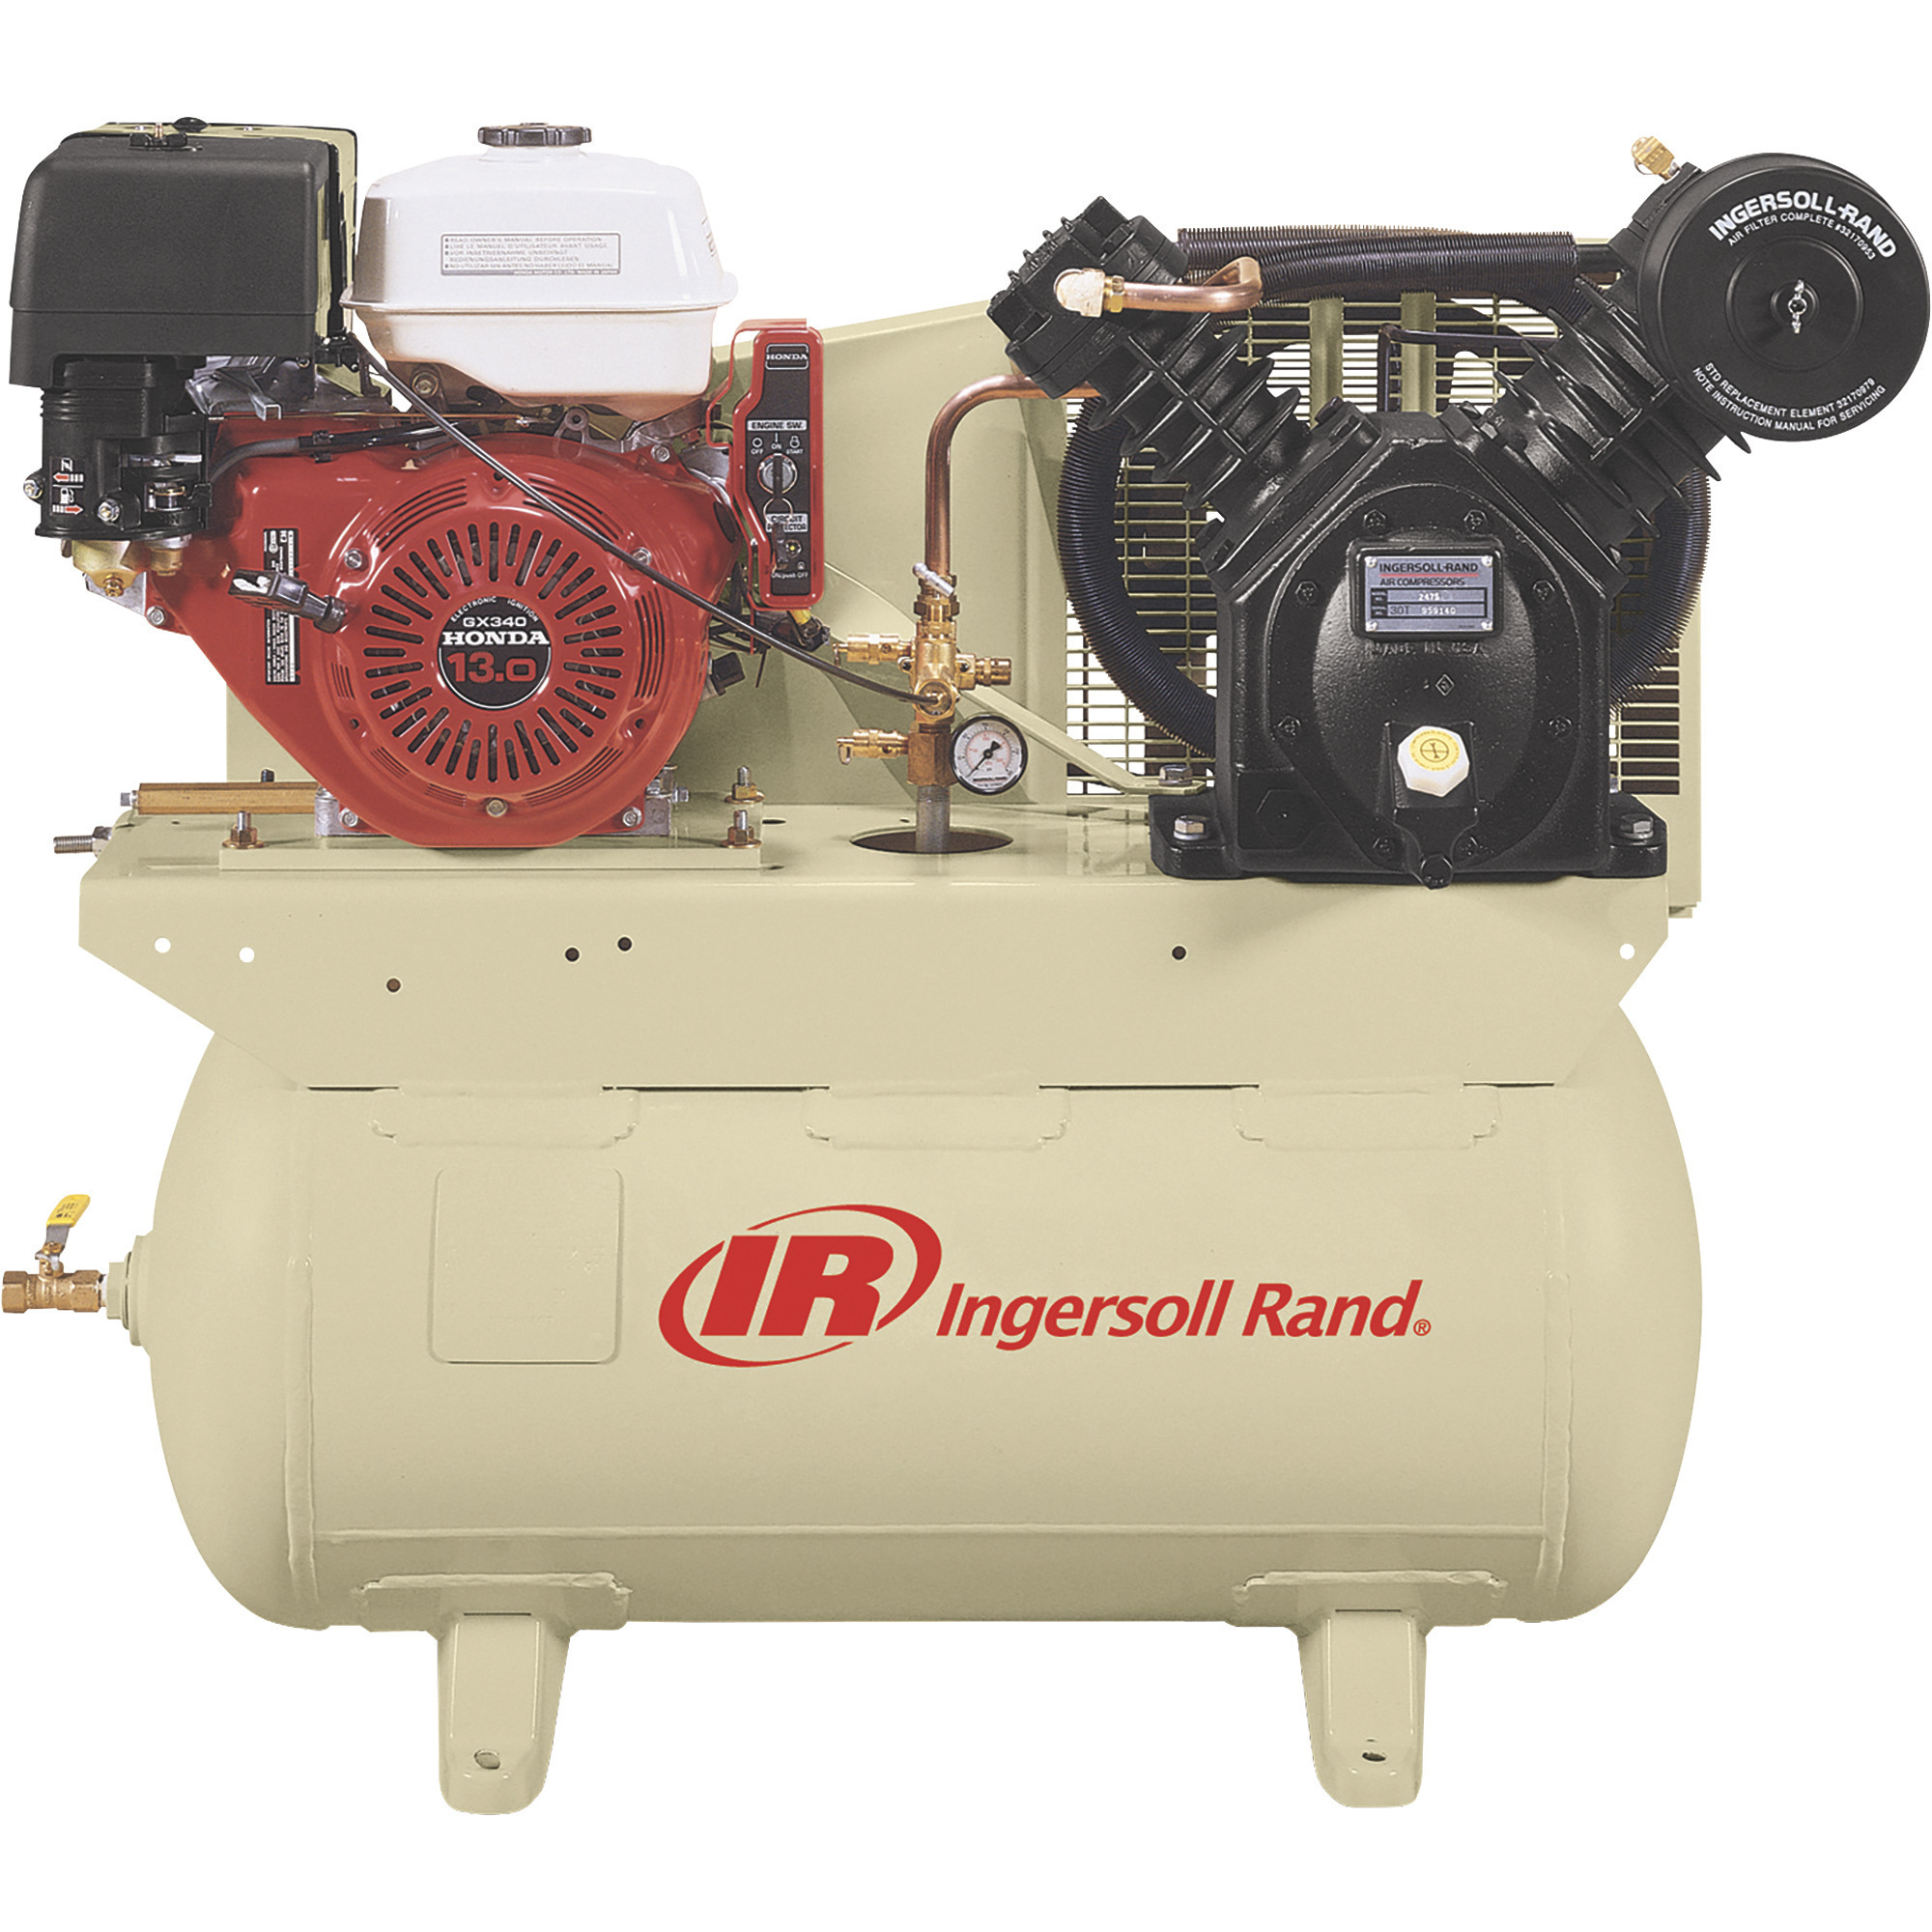 Ingersoll Rand 24 CFM @ 175 PSI Gas-Powered Air Compressor â 13 HP Honda Engine with Alternator, 30-Gallon Horizontal Tank, Model 2475F13GH